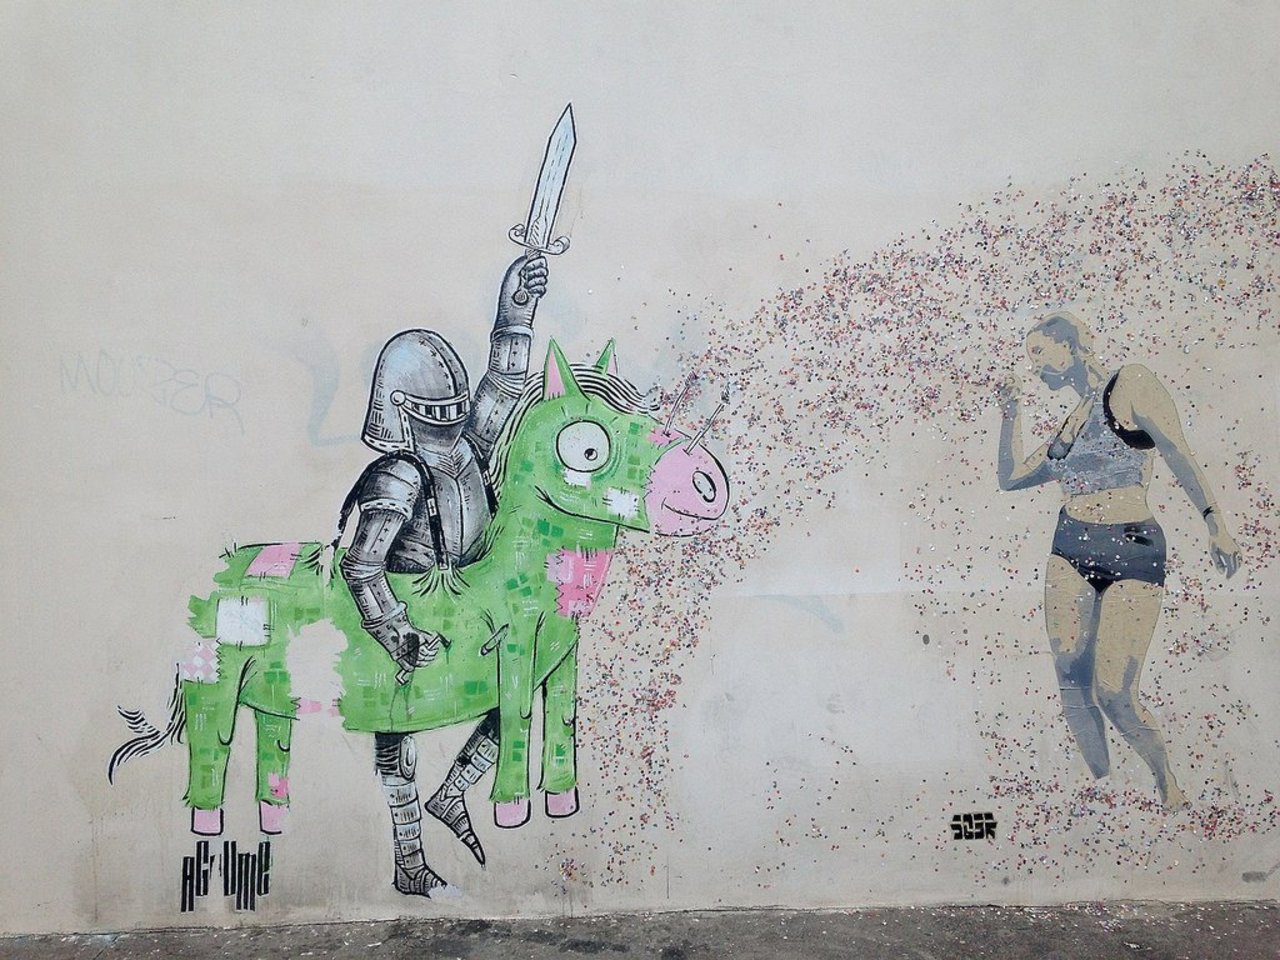 Street Art by Agrume in #Paris http://www.urbacolors.com #art #mural #graffiti #streetart https://t.co/DAhJyEdIQD https://goo.gl/t4fpx2